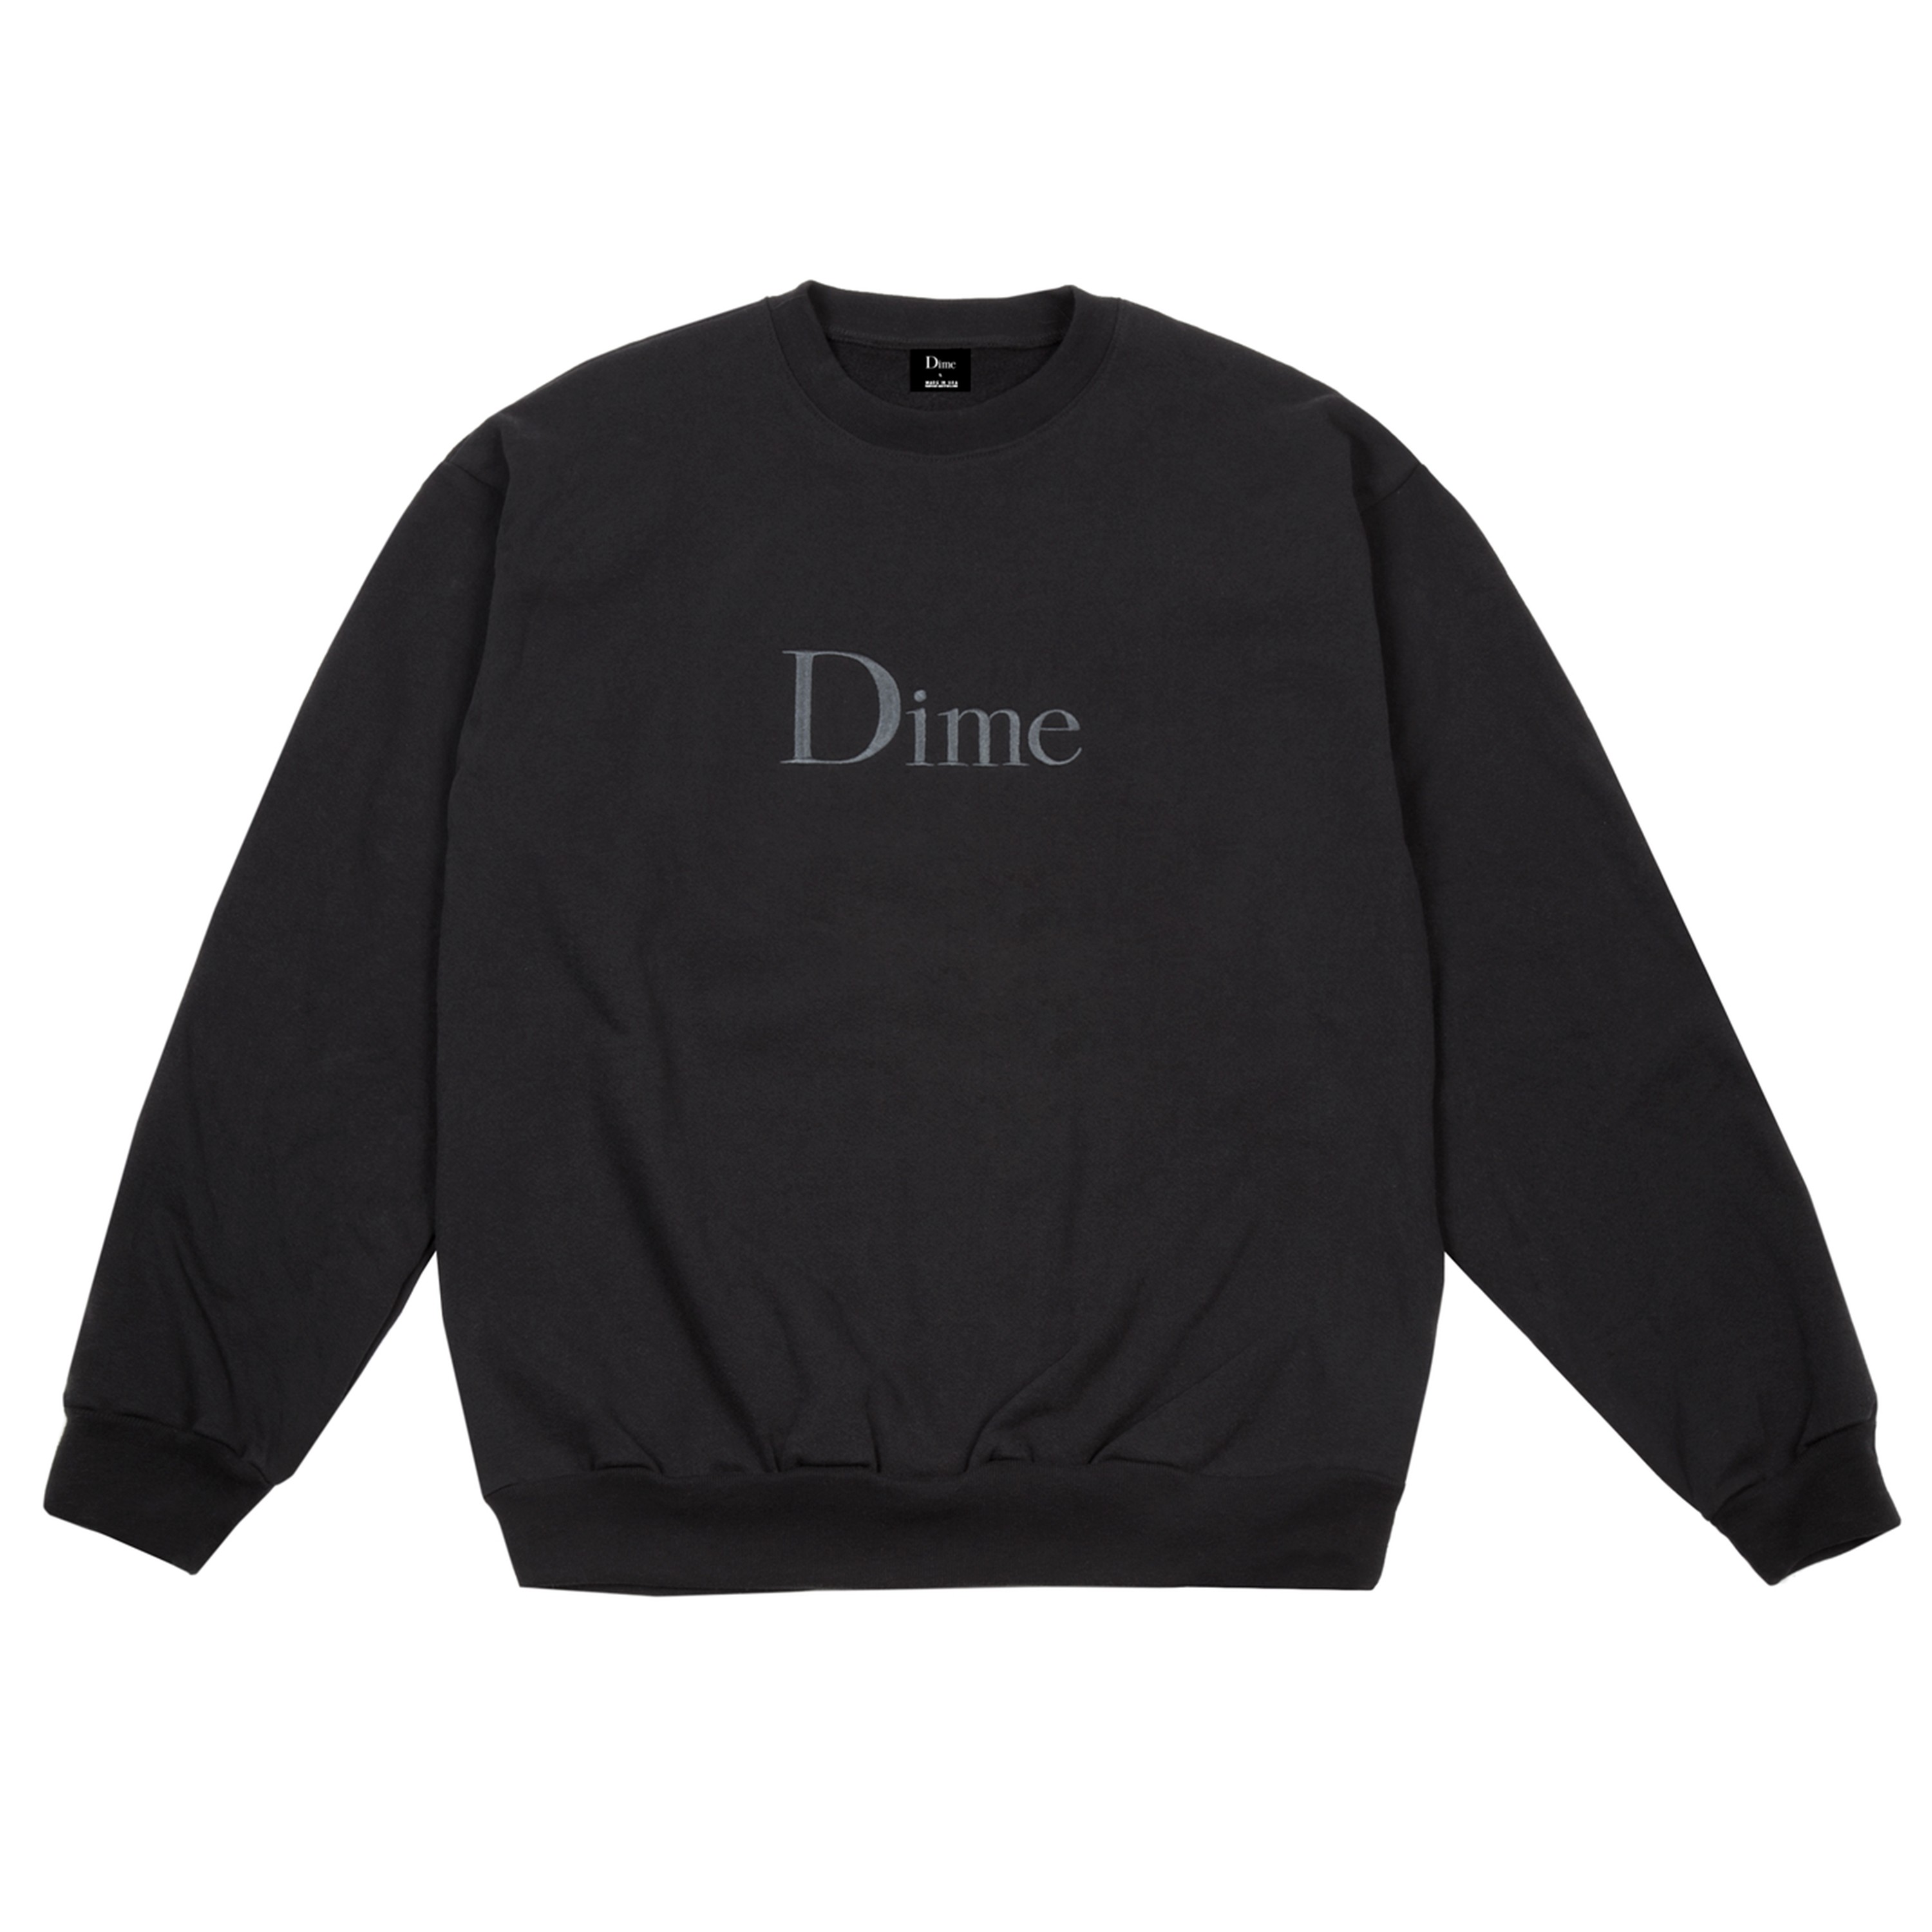 Dime Classic Embroidered Crew Neck Sweatshirt (Black) - DIMES1914BLK